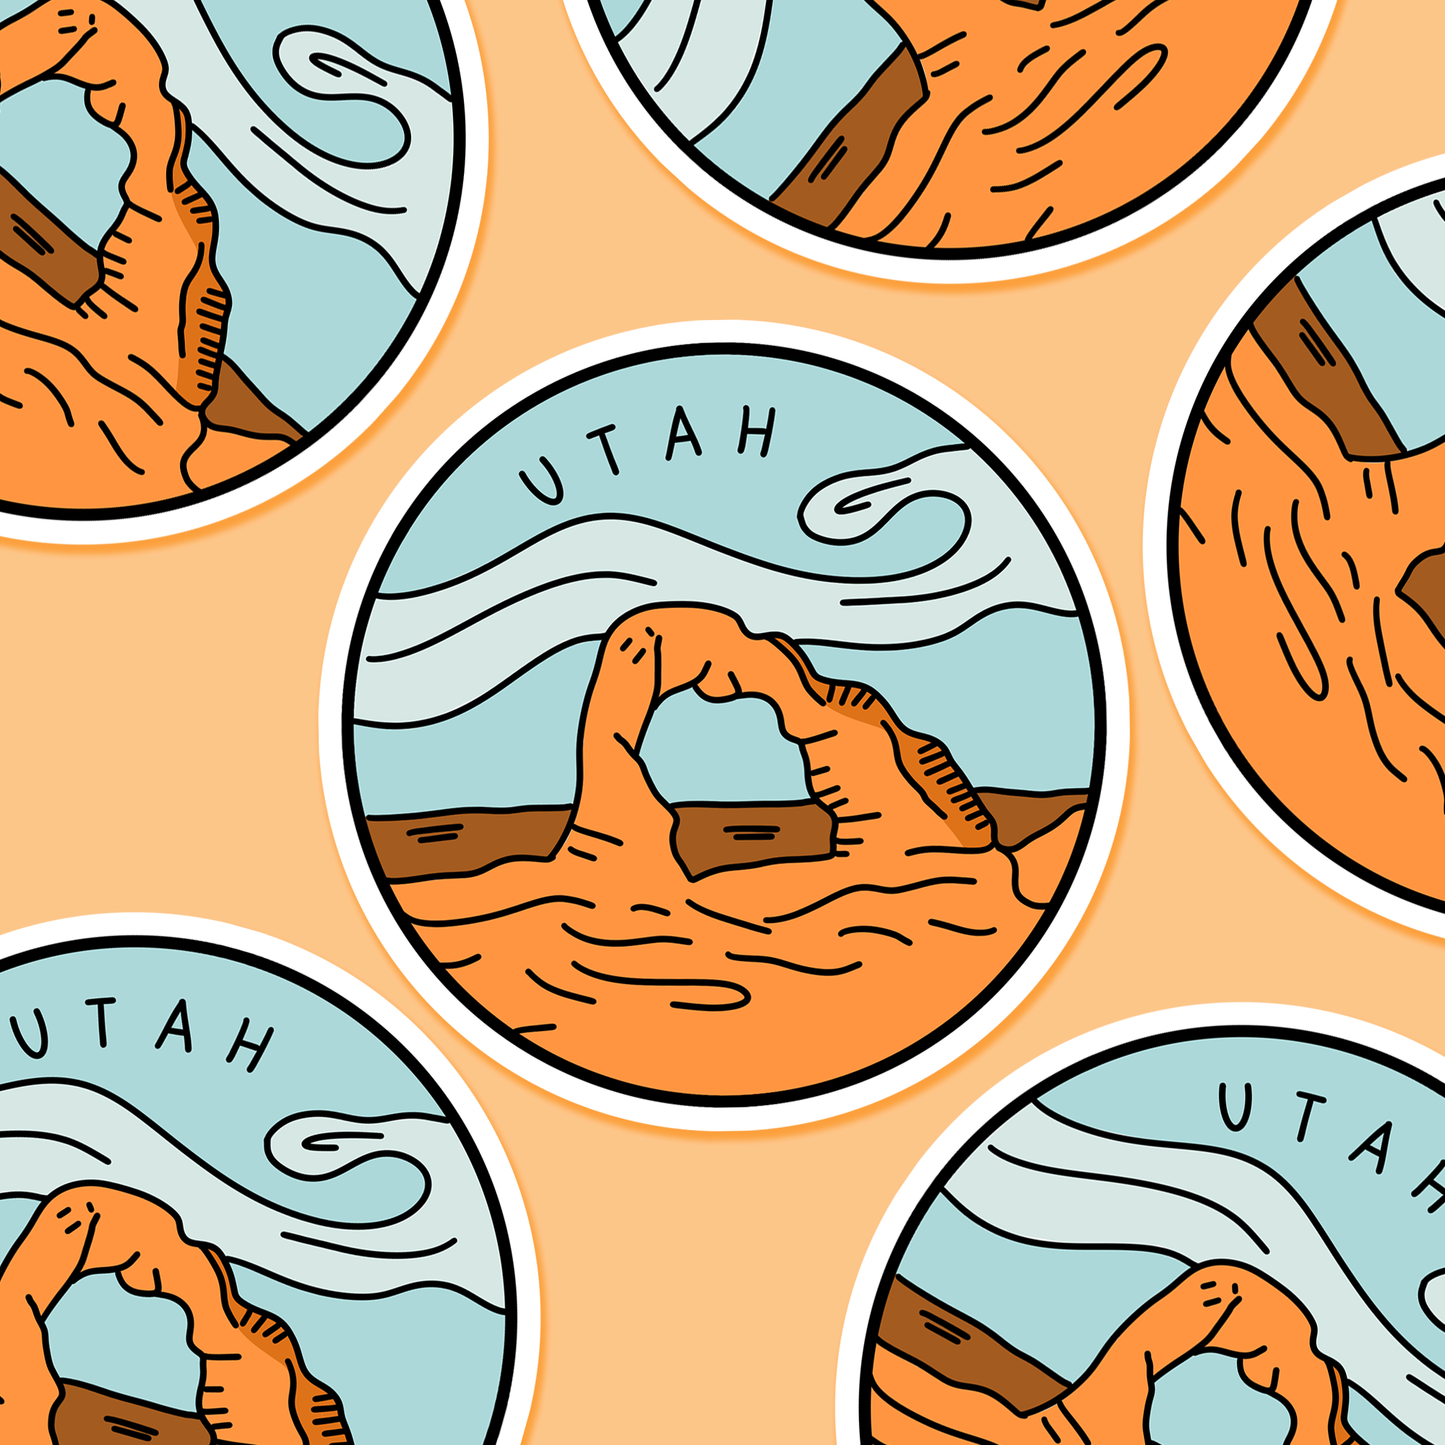 Utah Illustrated US State 3 x 3 in - Travel Sticker